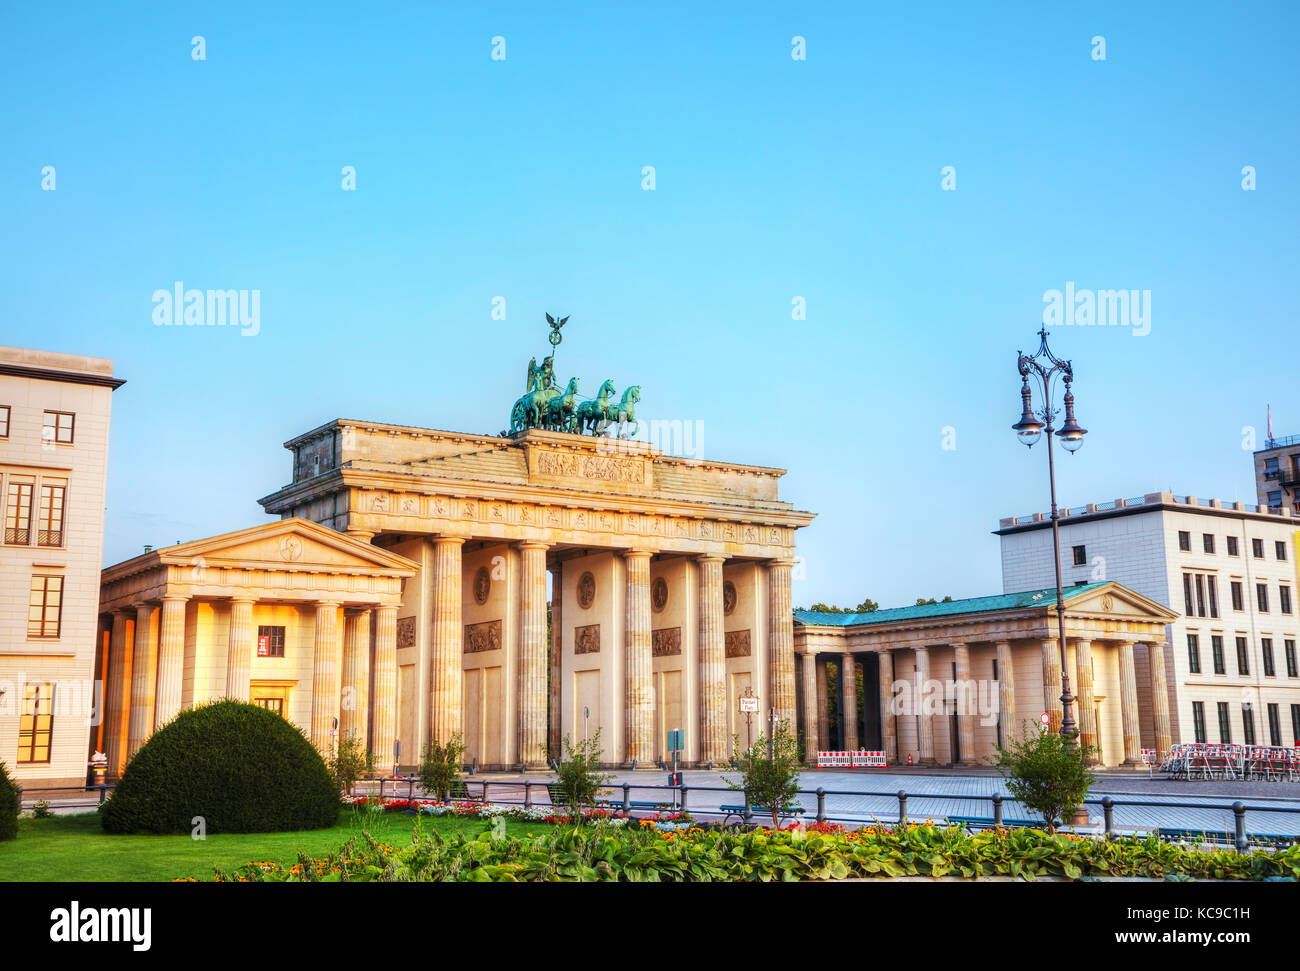 Porte de Brandebourg (Brandenburger Tor) à Berlin, Allemagne, au lever du soleil Banque D'Images